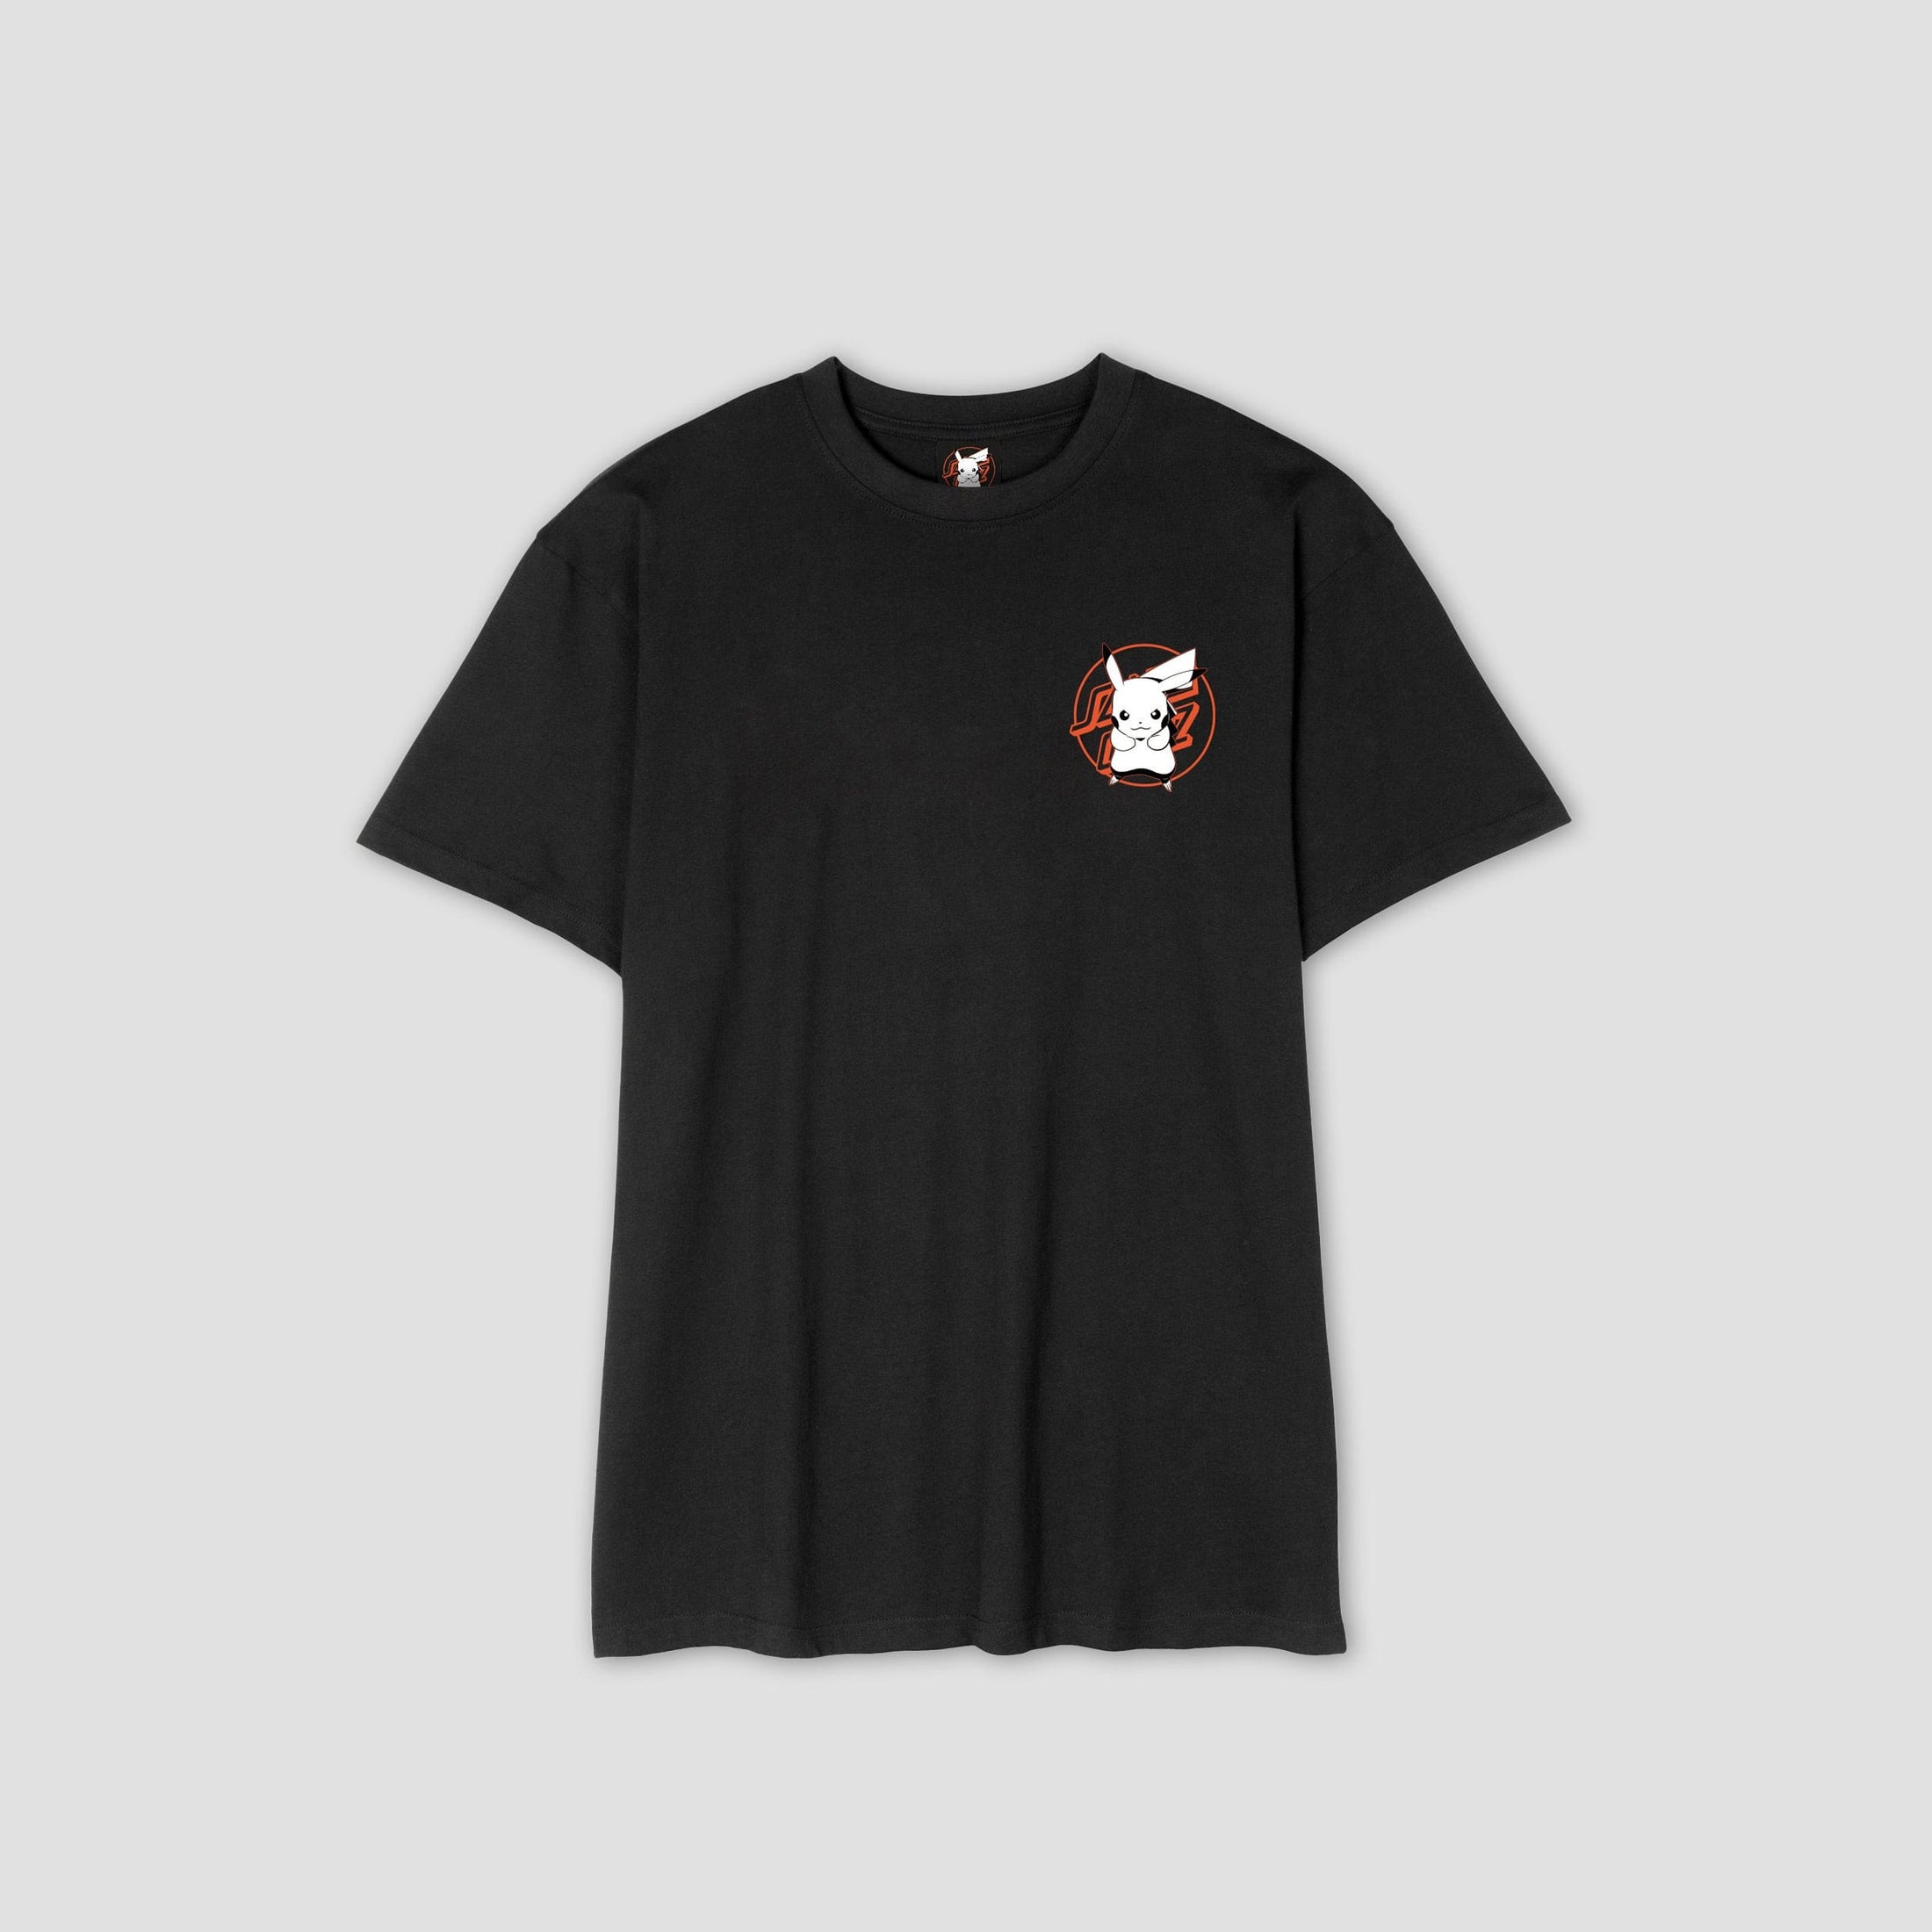 Santa Cruz X Pokemon Pikachu T-Shirt Black